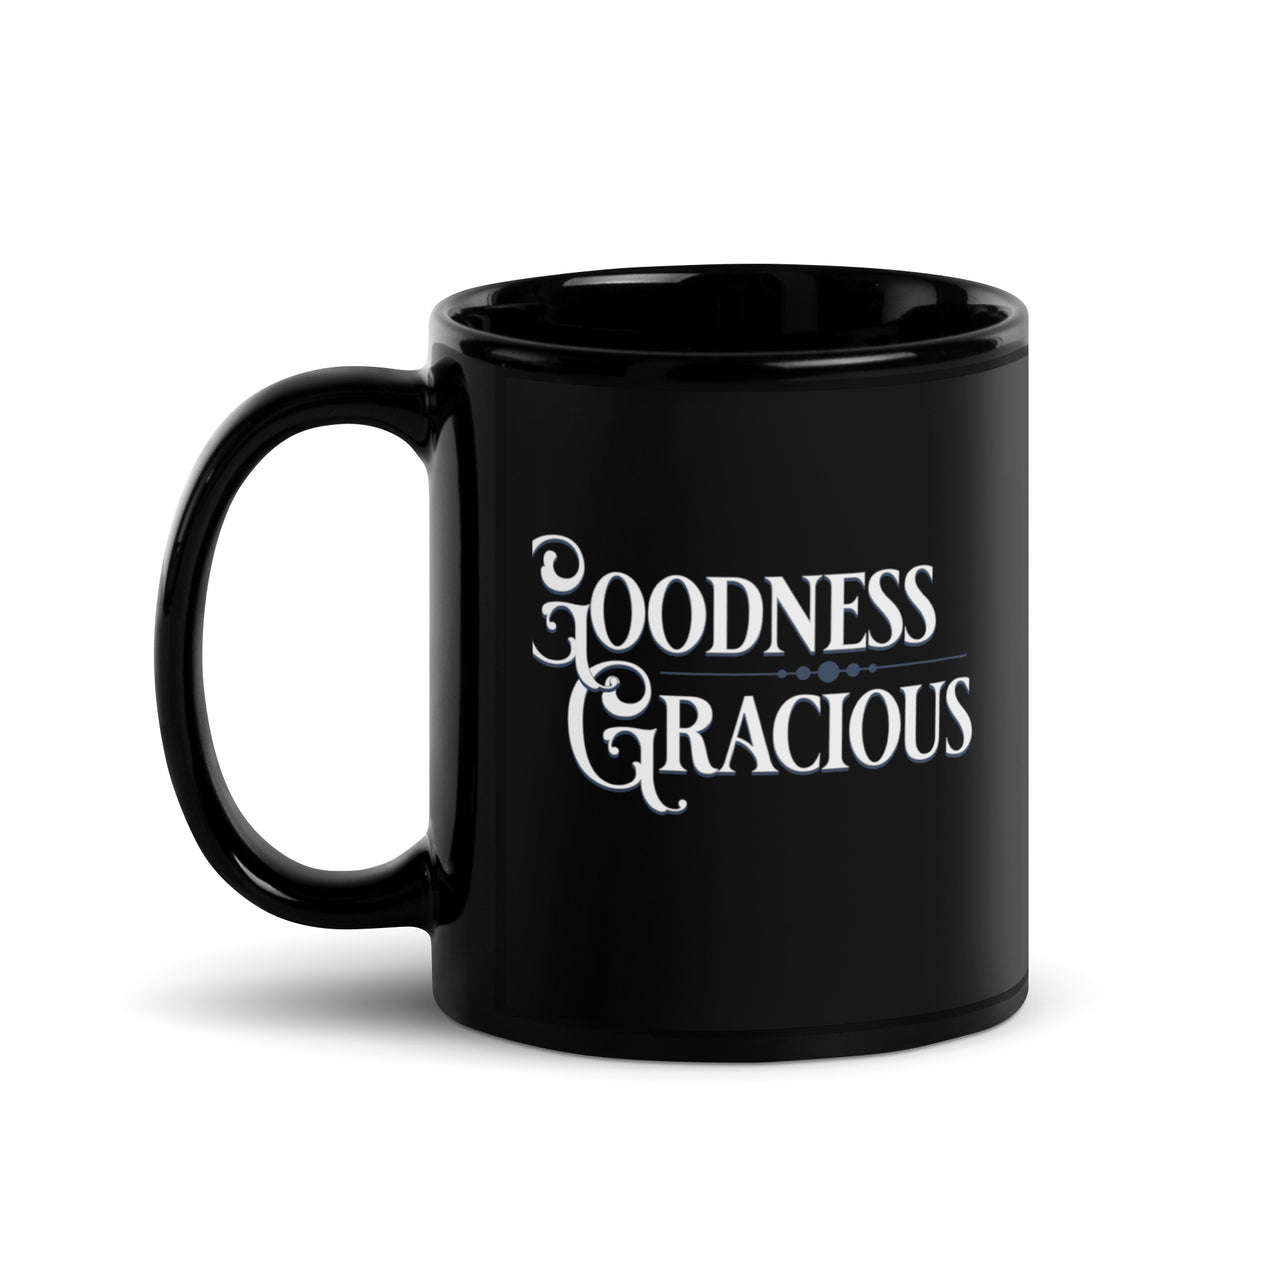 Goodness Gracious A Southern Saying Black Mug